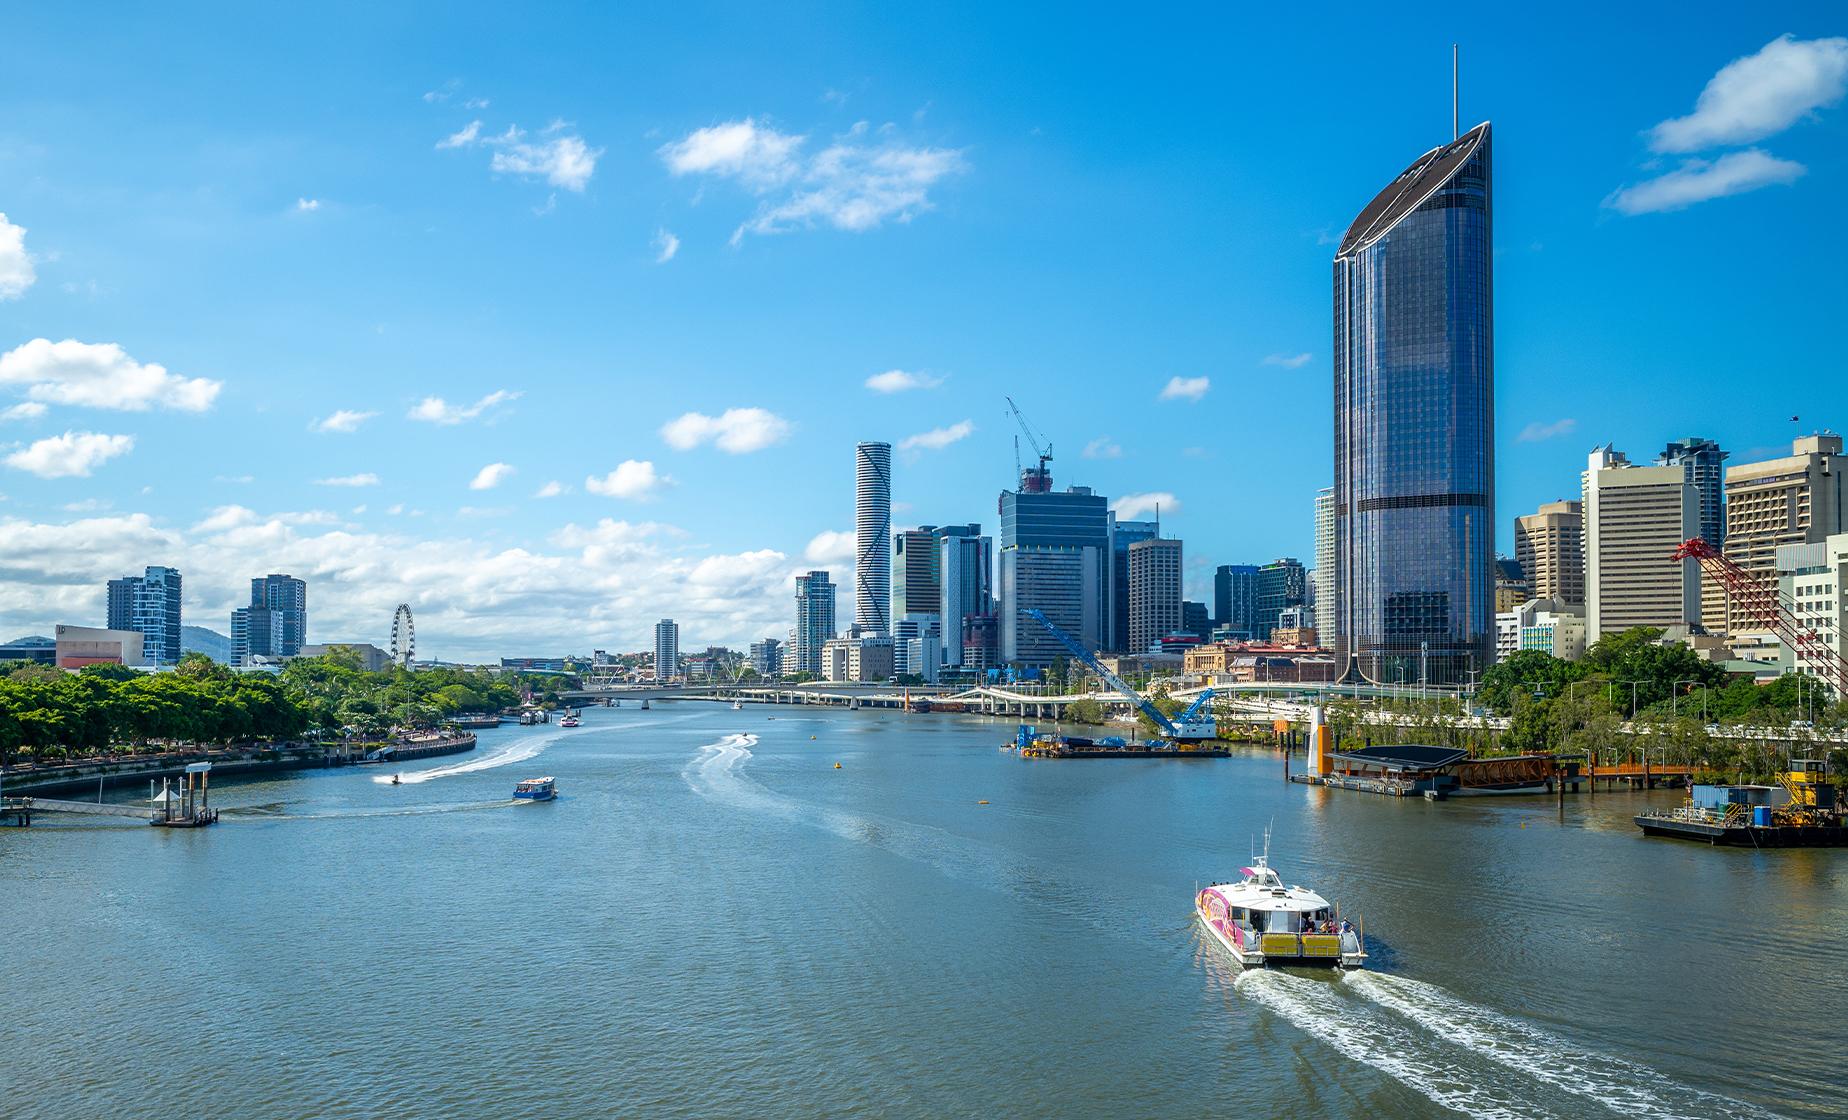 Brisbane City Tour with River Cruise (China Town, Parliament House, South Bank Parklands)